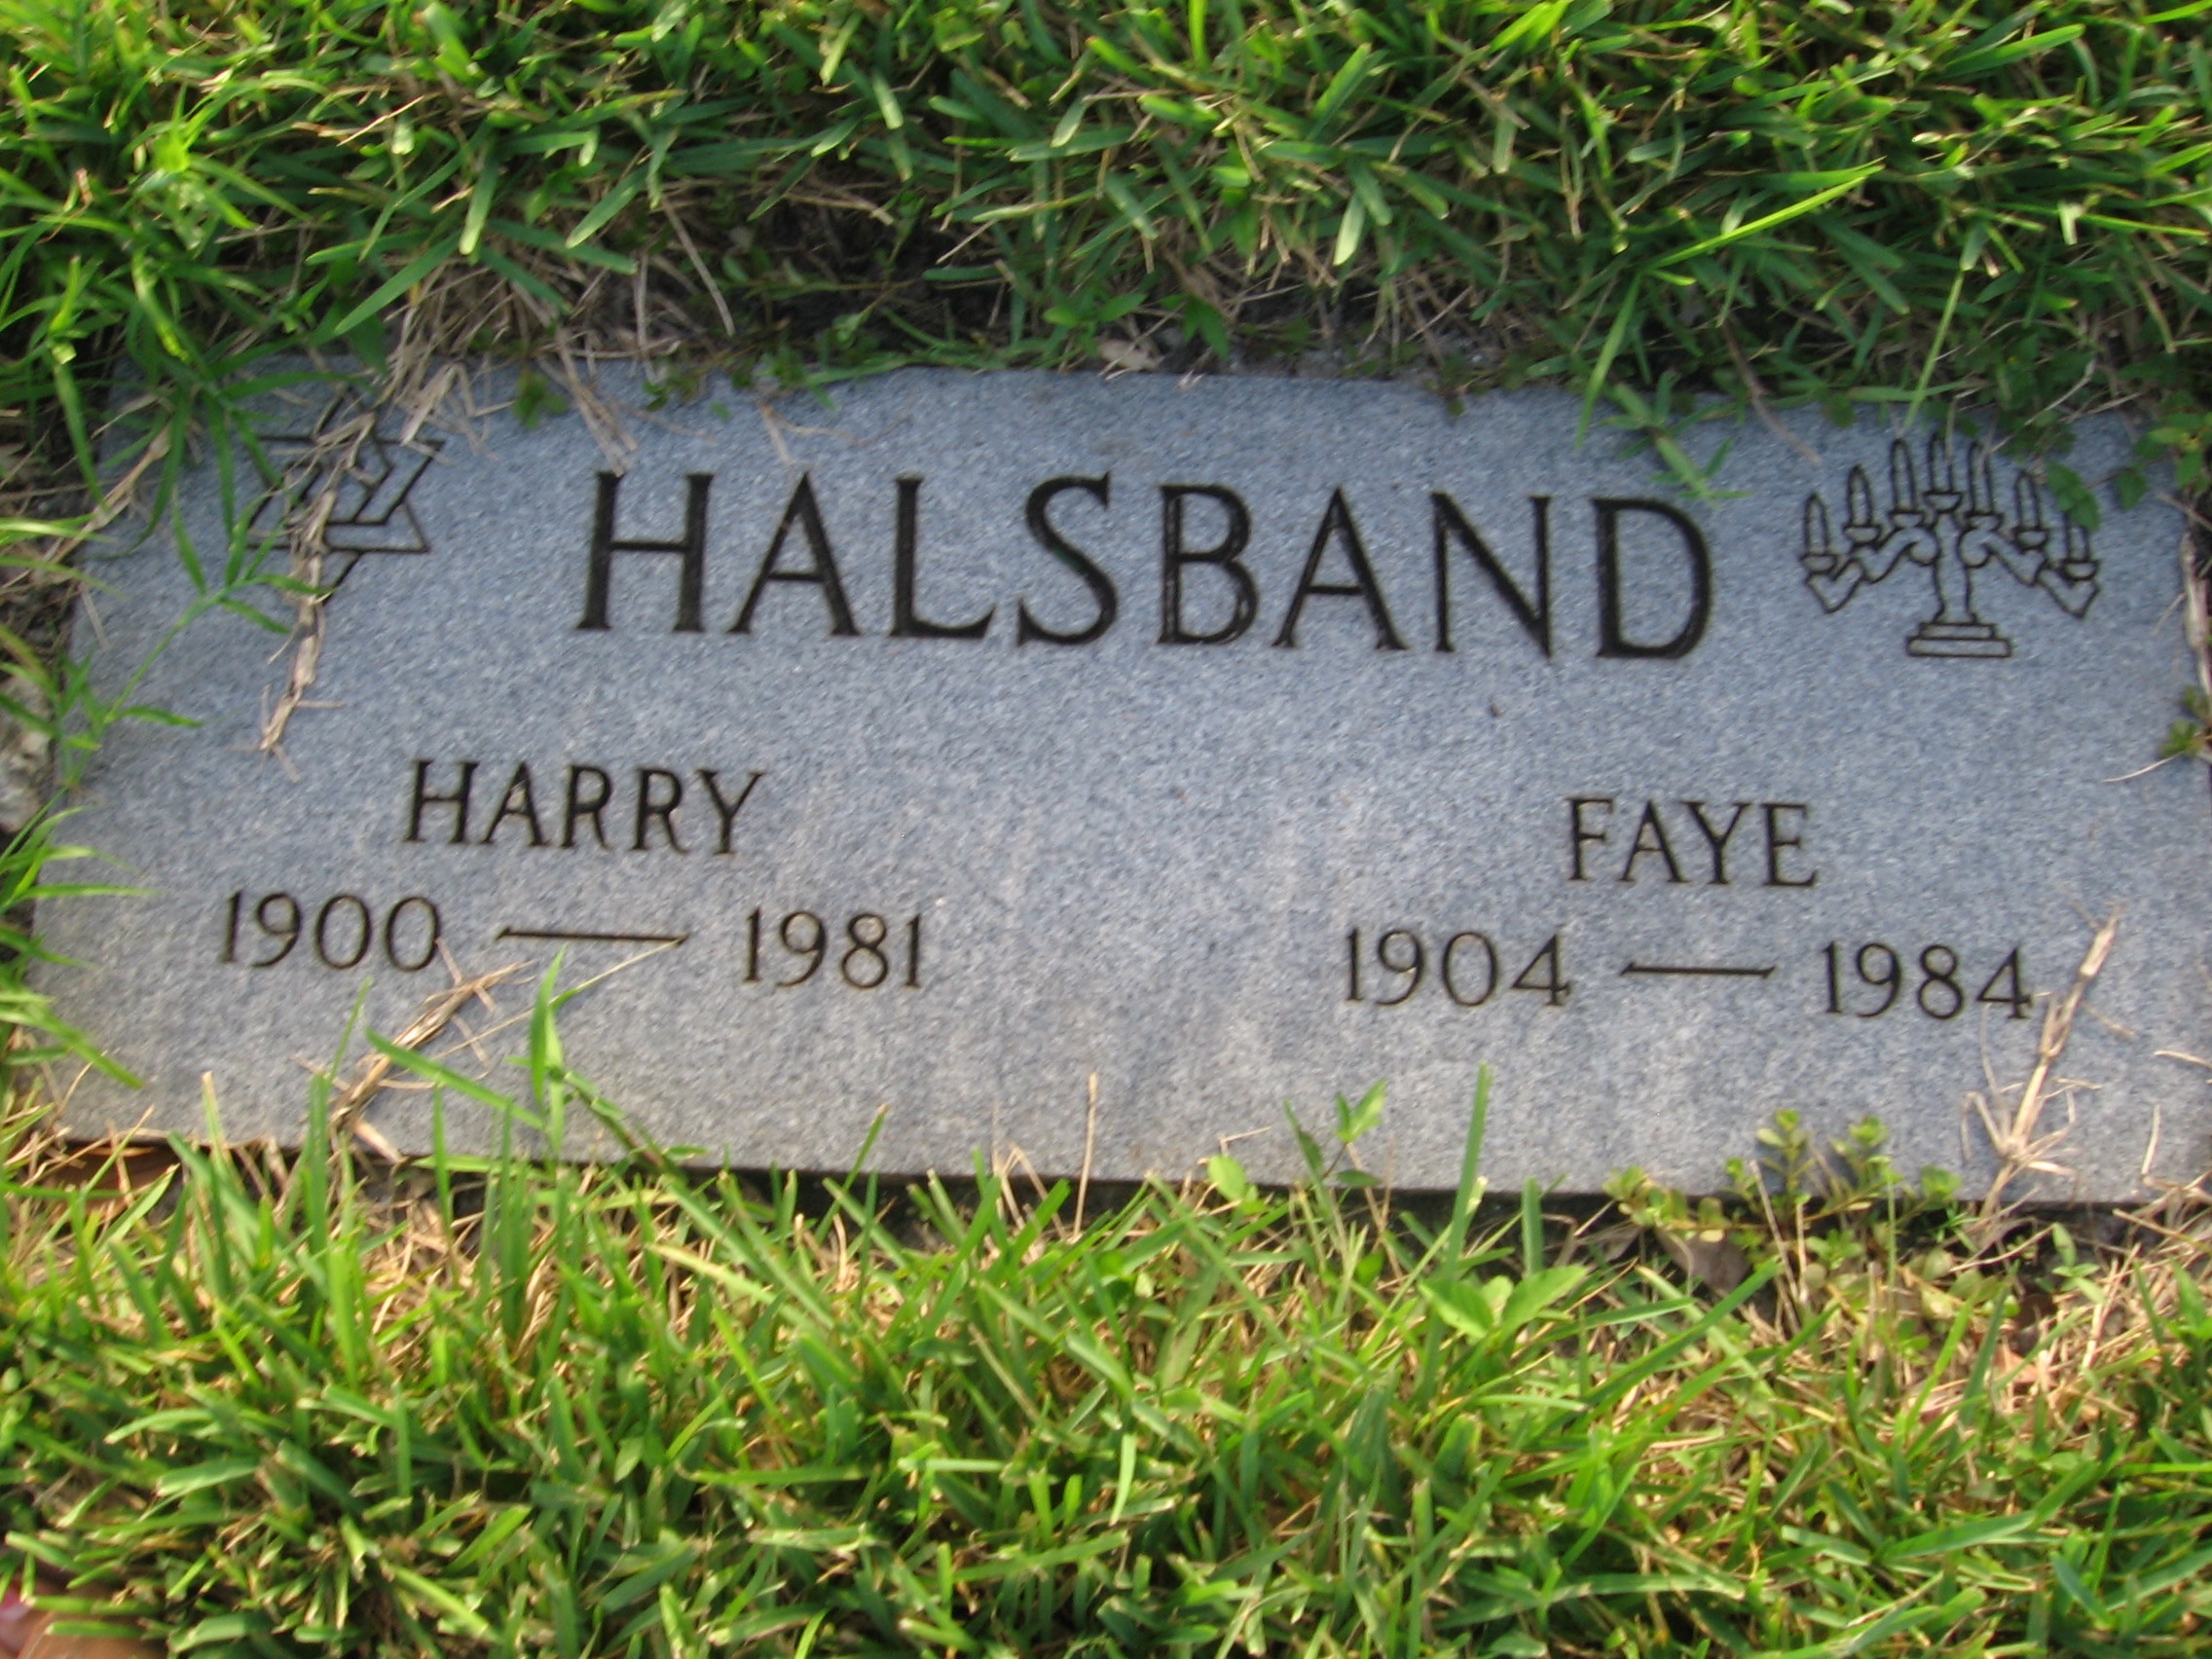 Faye Halsband